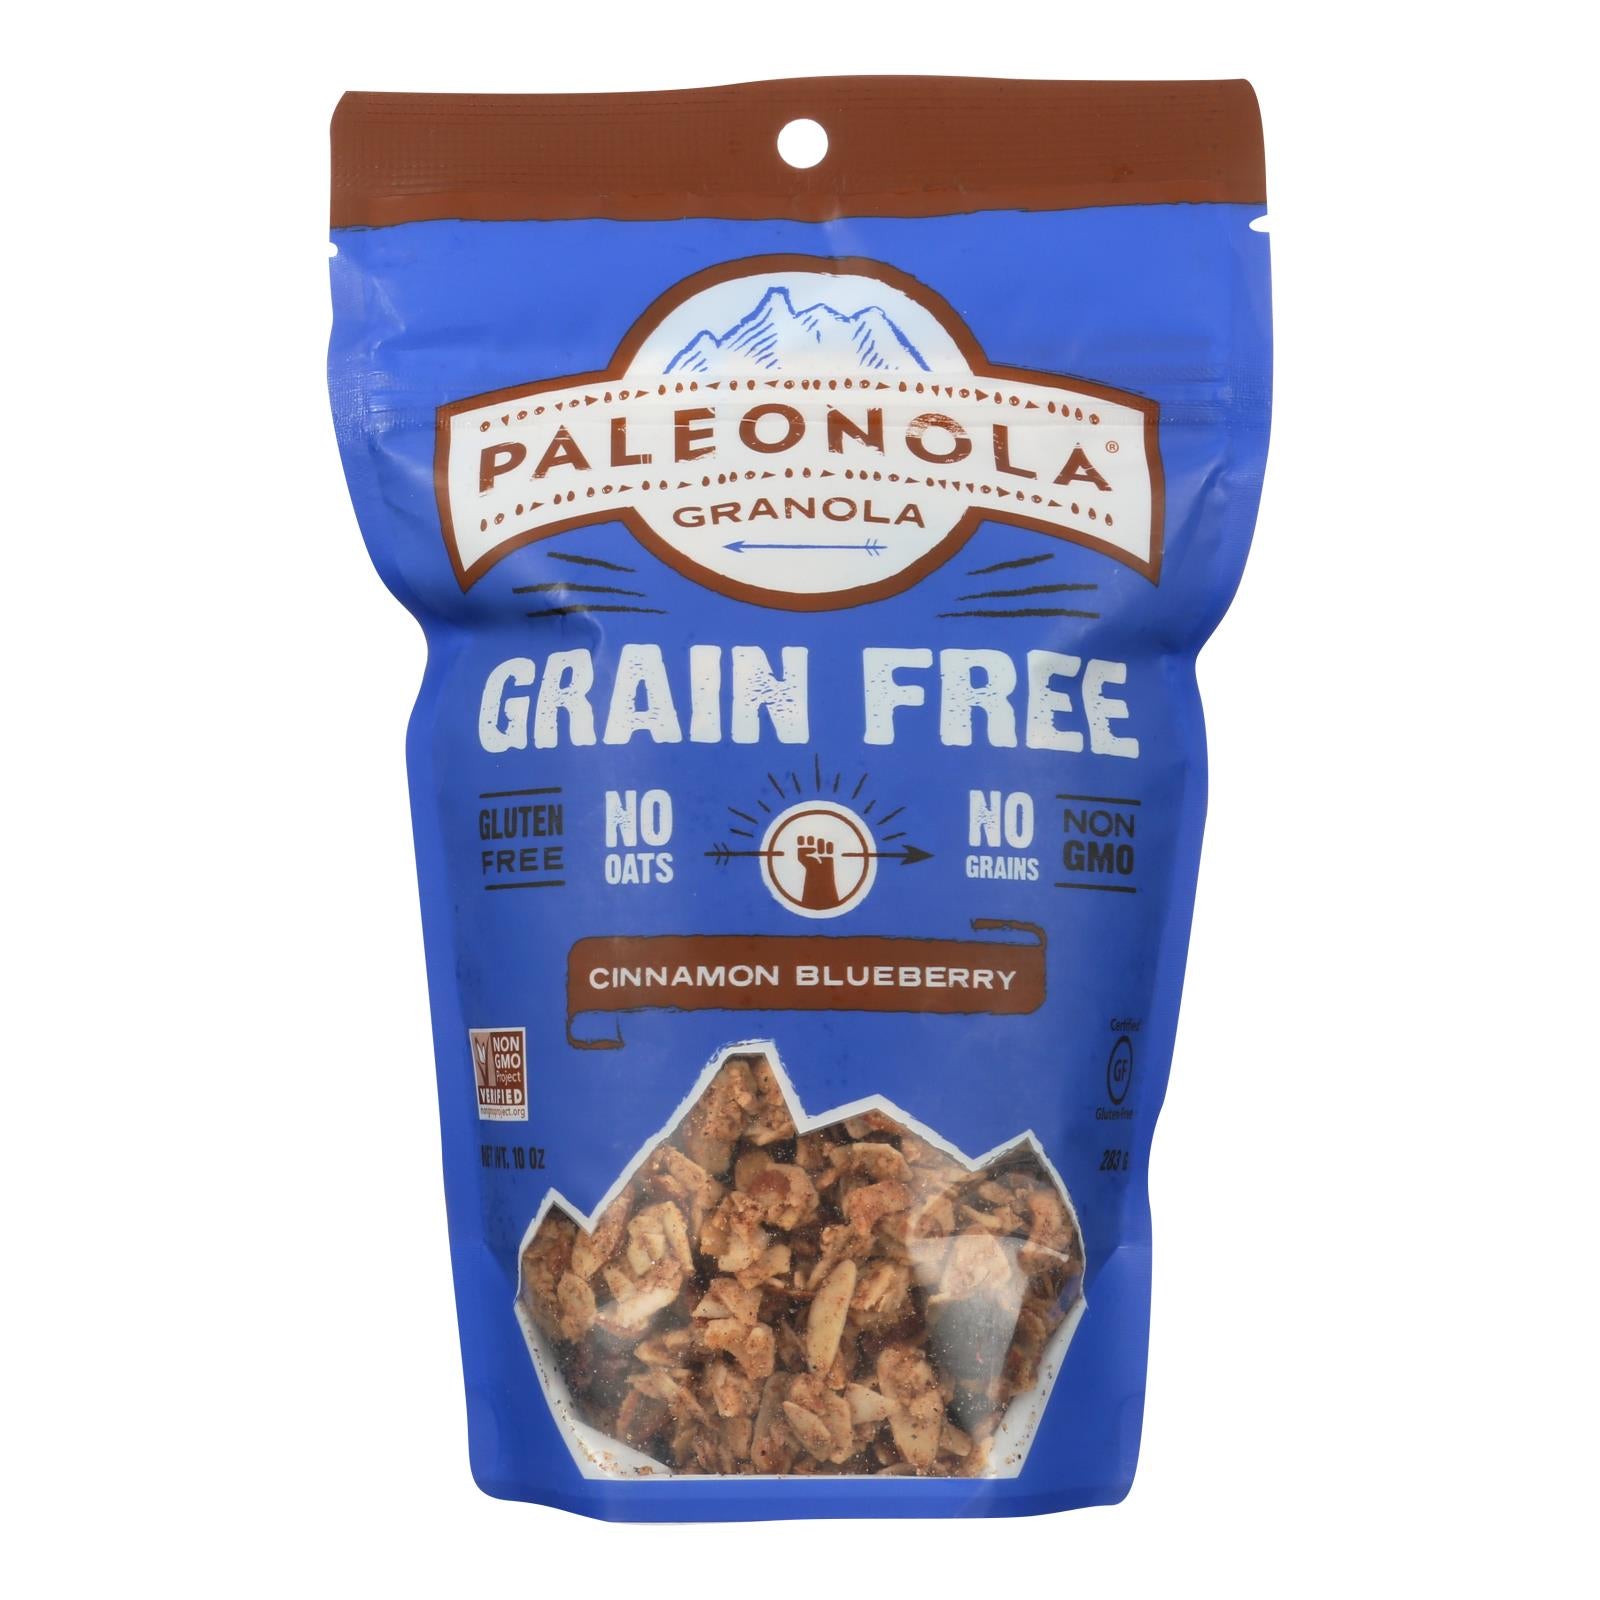 Paleonola® Cinnamon Blueberry Grain Free Granola, Cinnamon Blueberry - Case Of 6 - 10 Oz